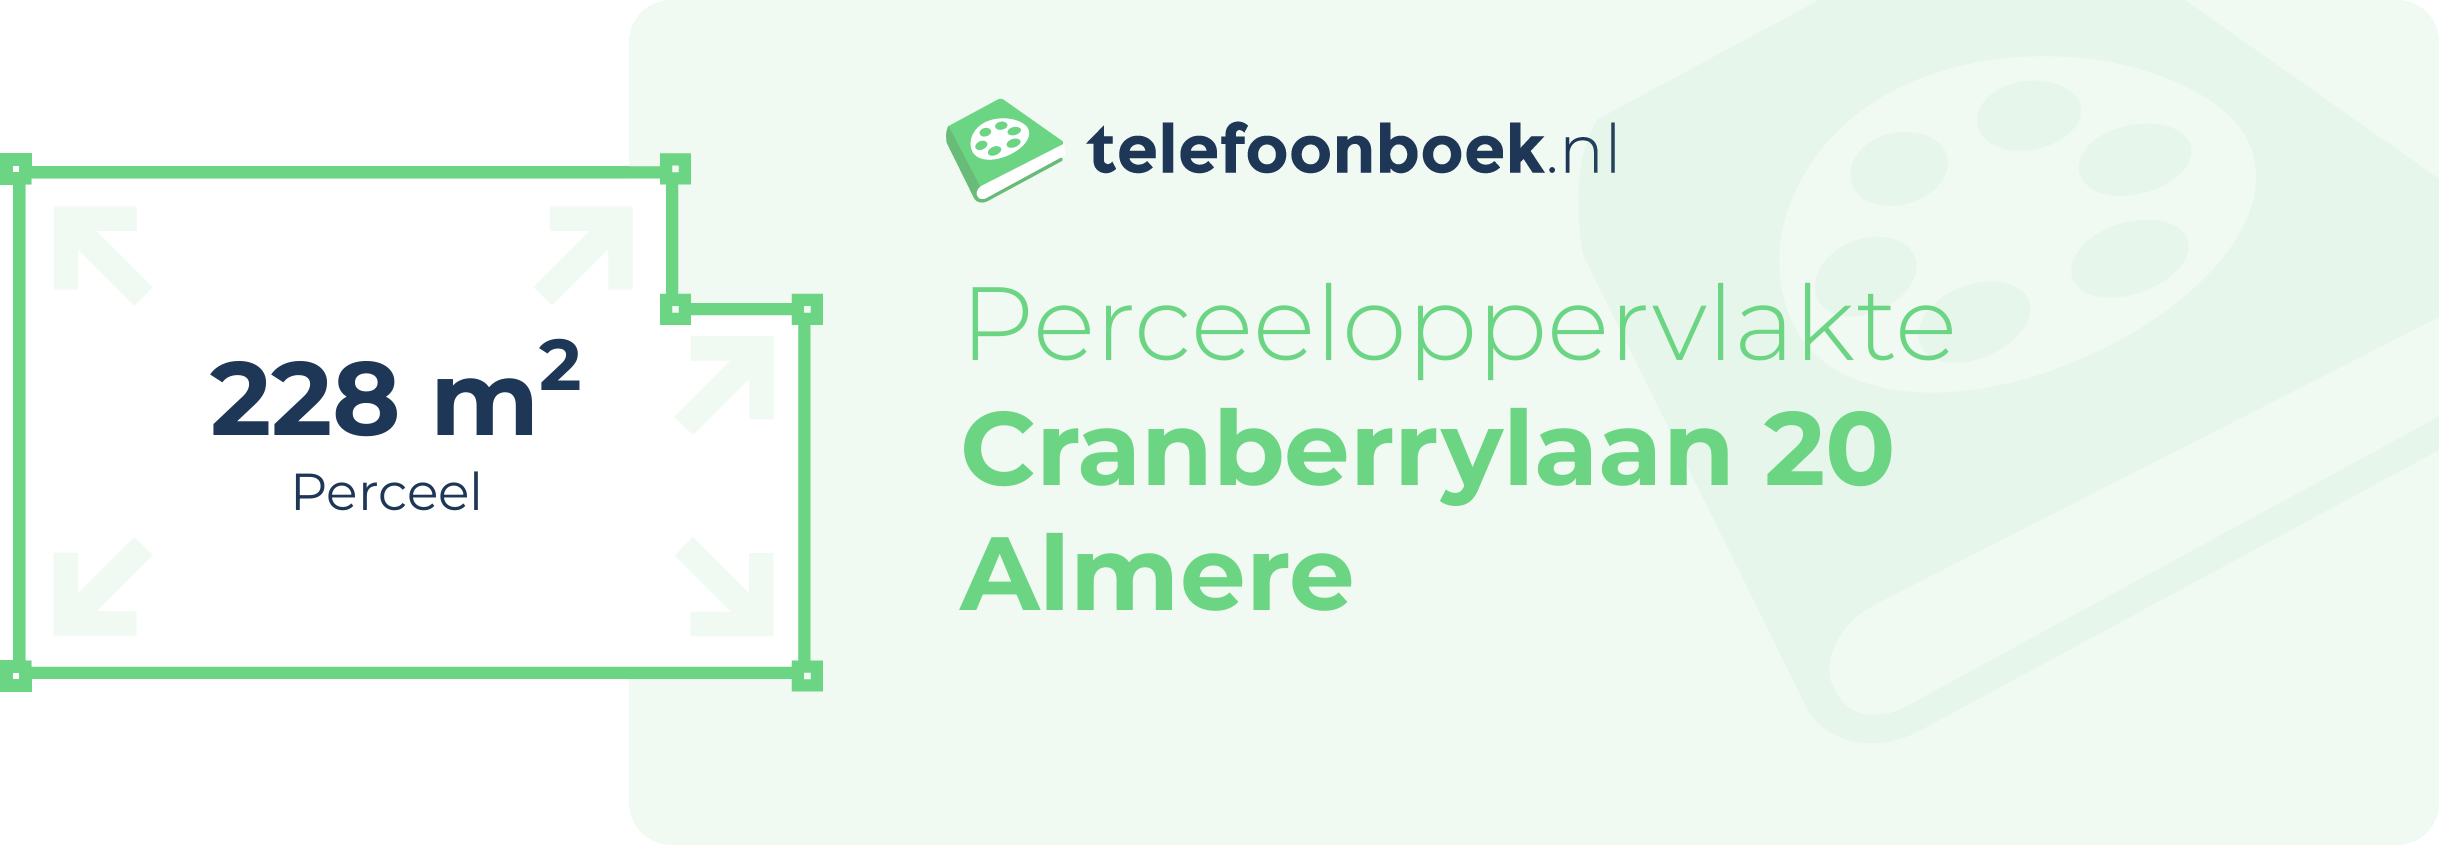 Perceeloppervlakte Cranberrylaan 20 Almere